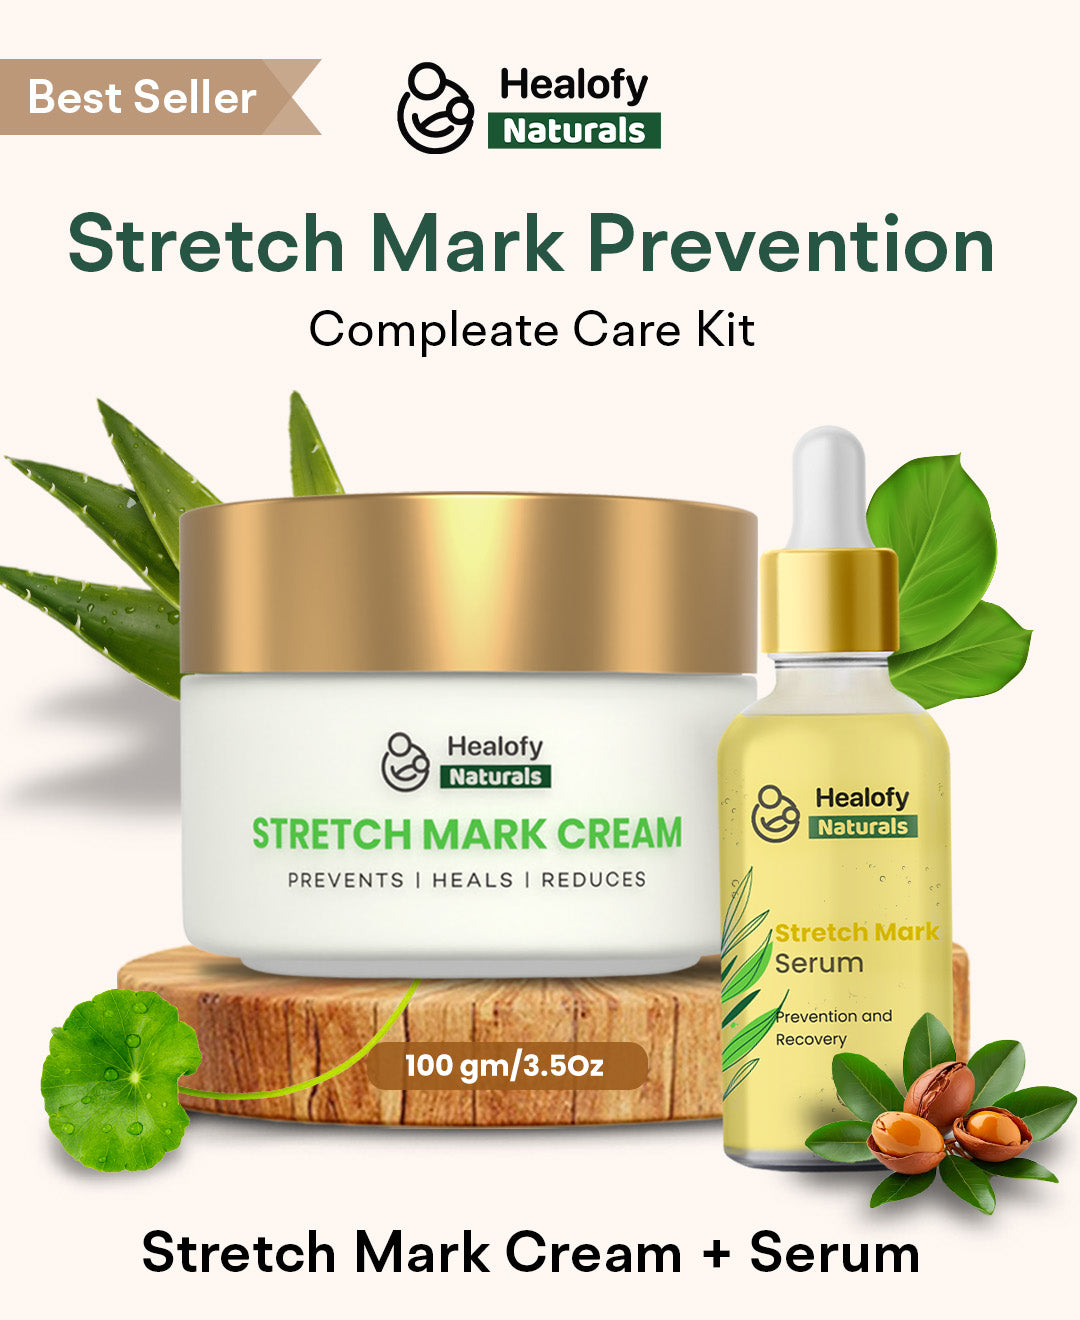 Healofy Naturals Stretch Marks Cream, Pack Of 2